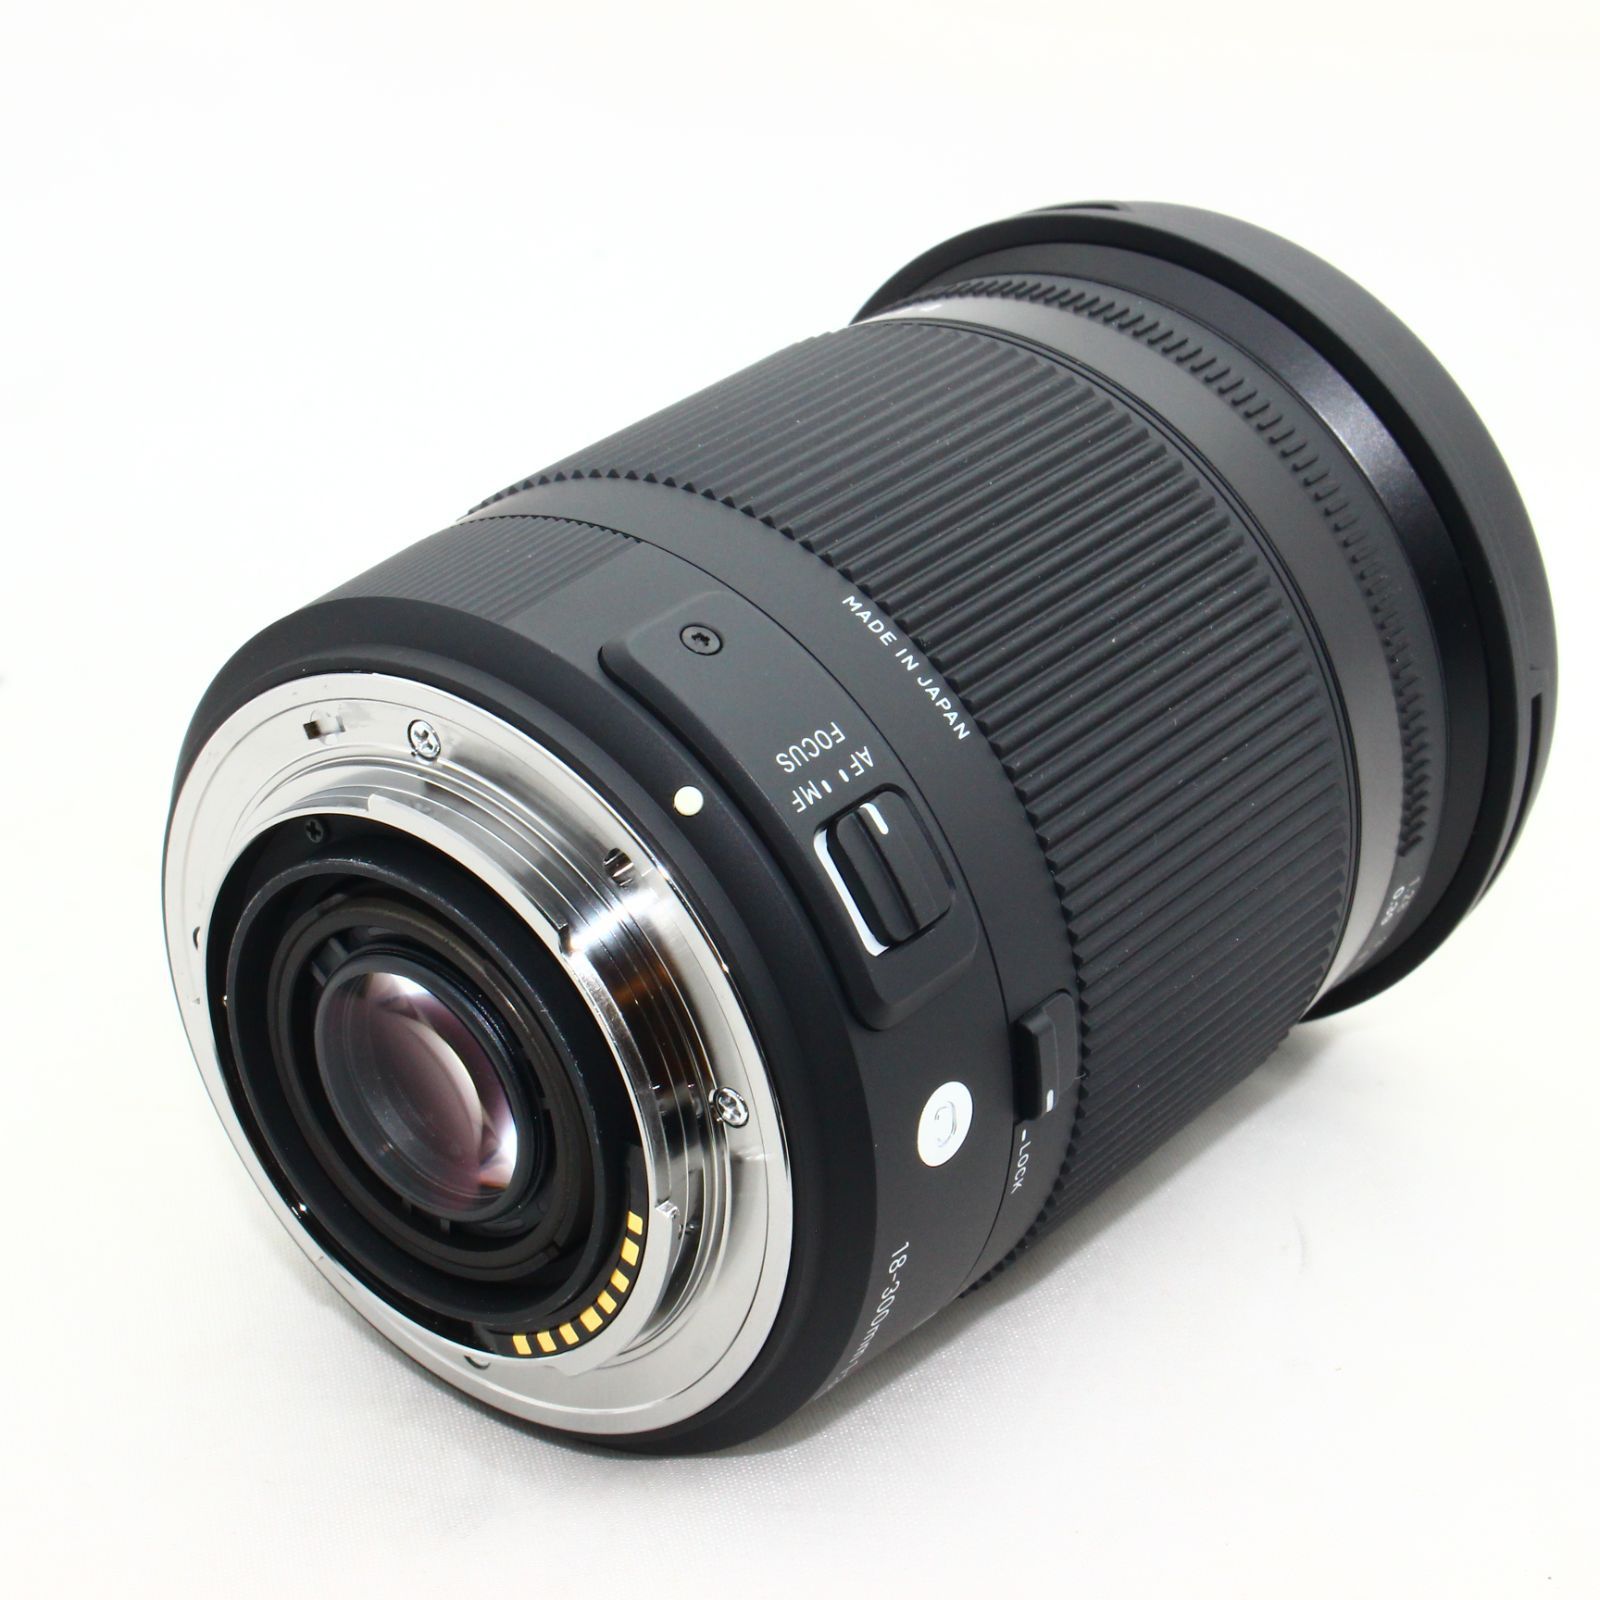 SIGMA 18-300mm F3.5-6.3 DC MACRO HSM | Contemporary C014 | Sony A